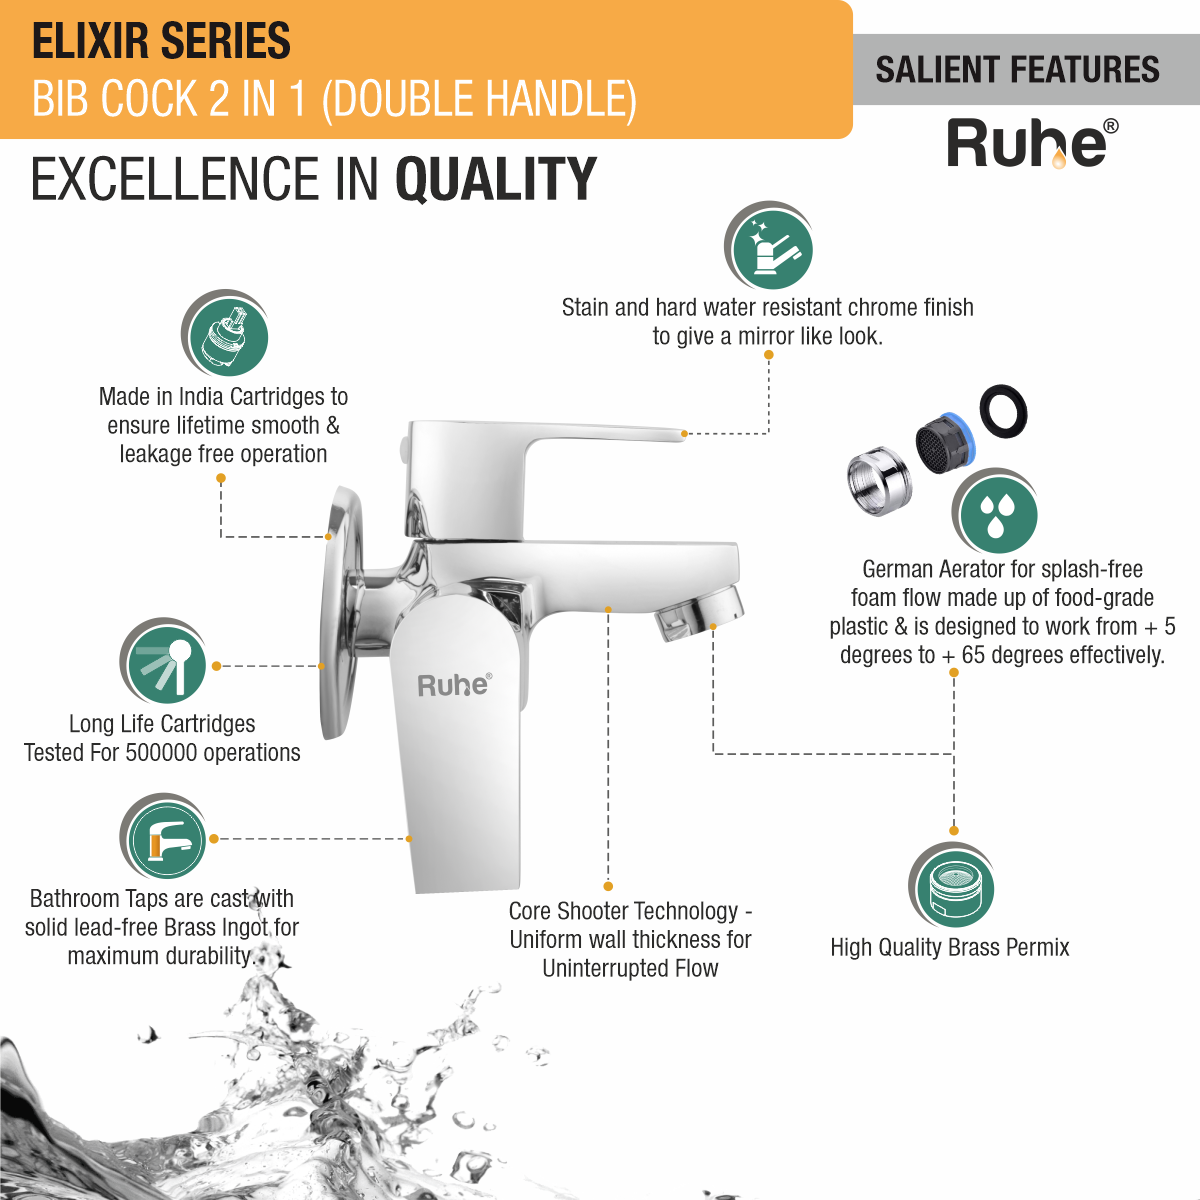 Elixir Two Way Bib Tap Brass Faucet (Double Handle) features